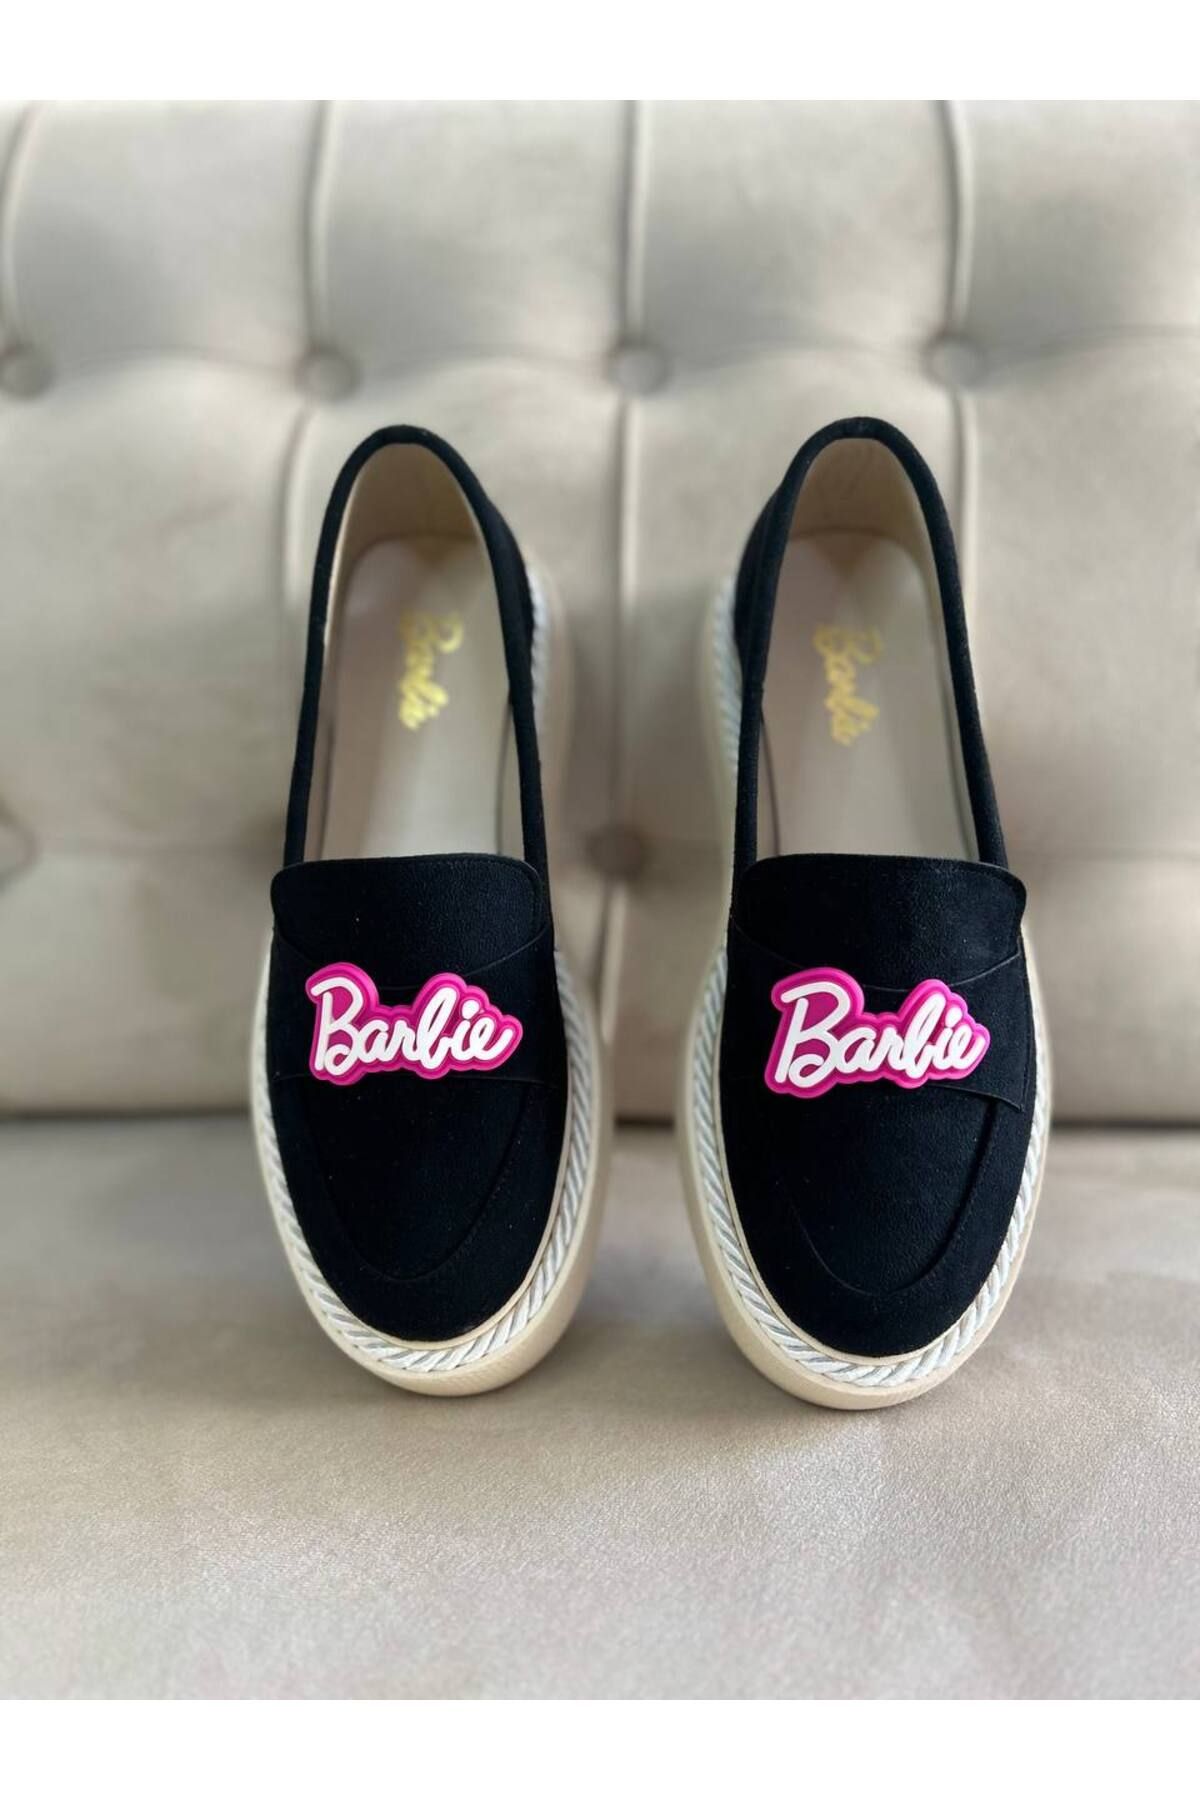 Barbie loafer ayakkabı